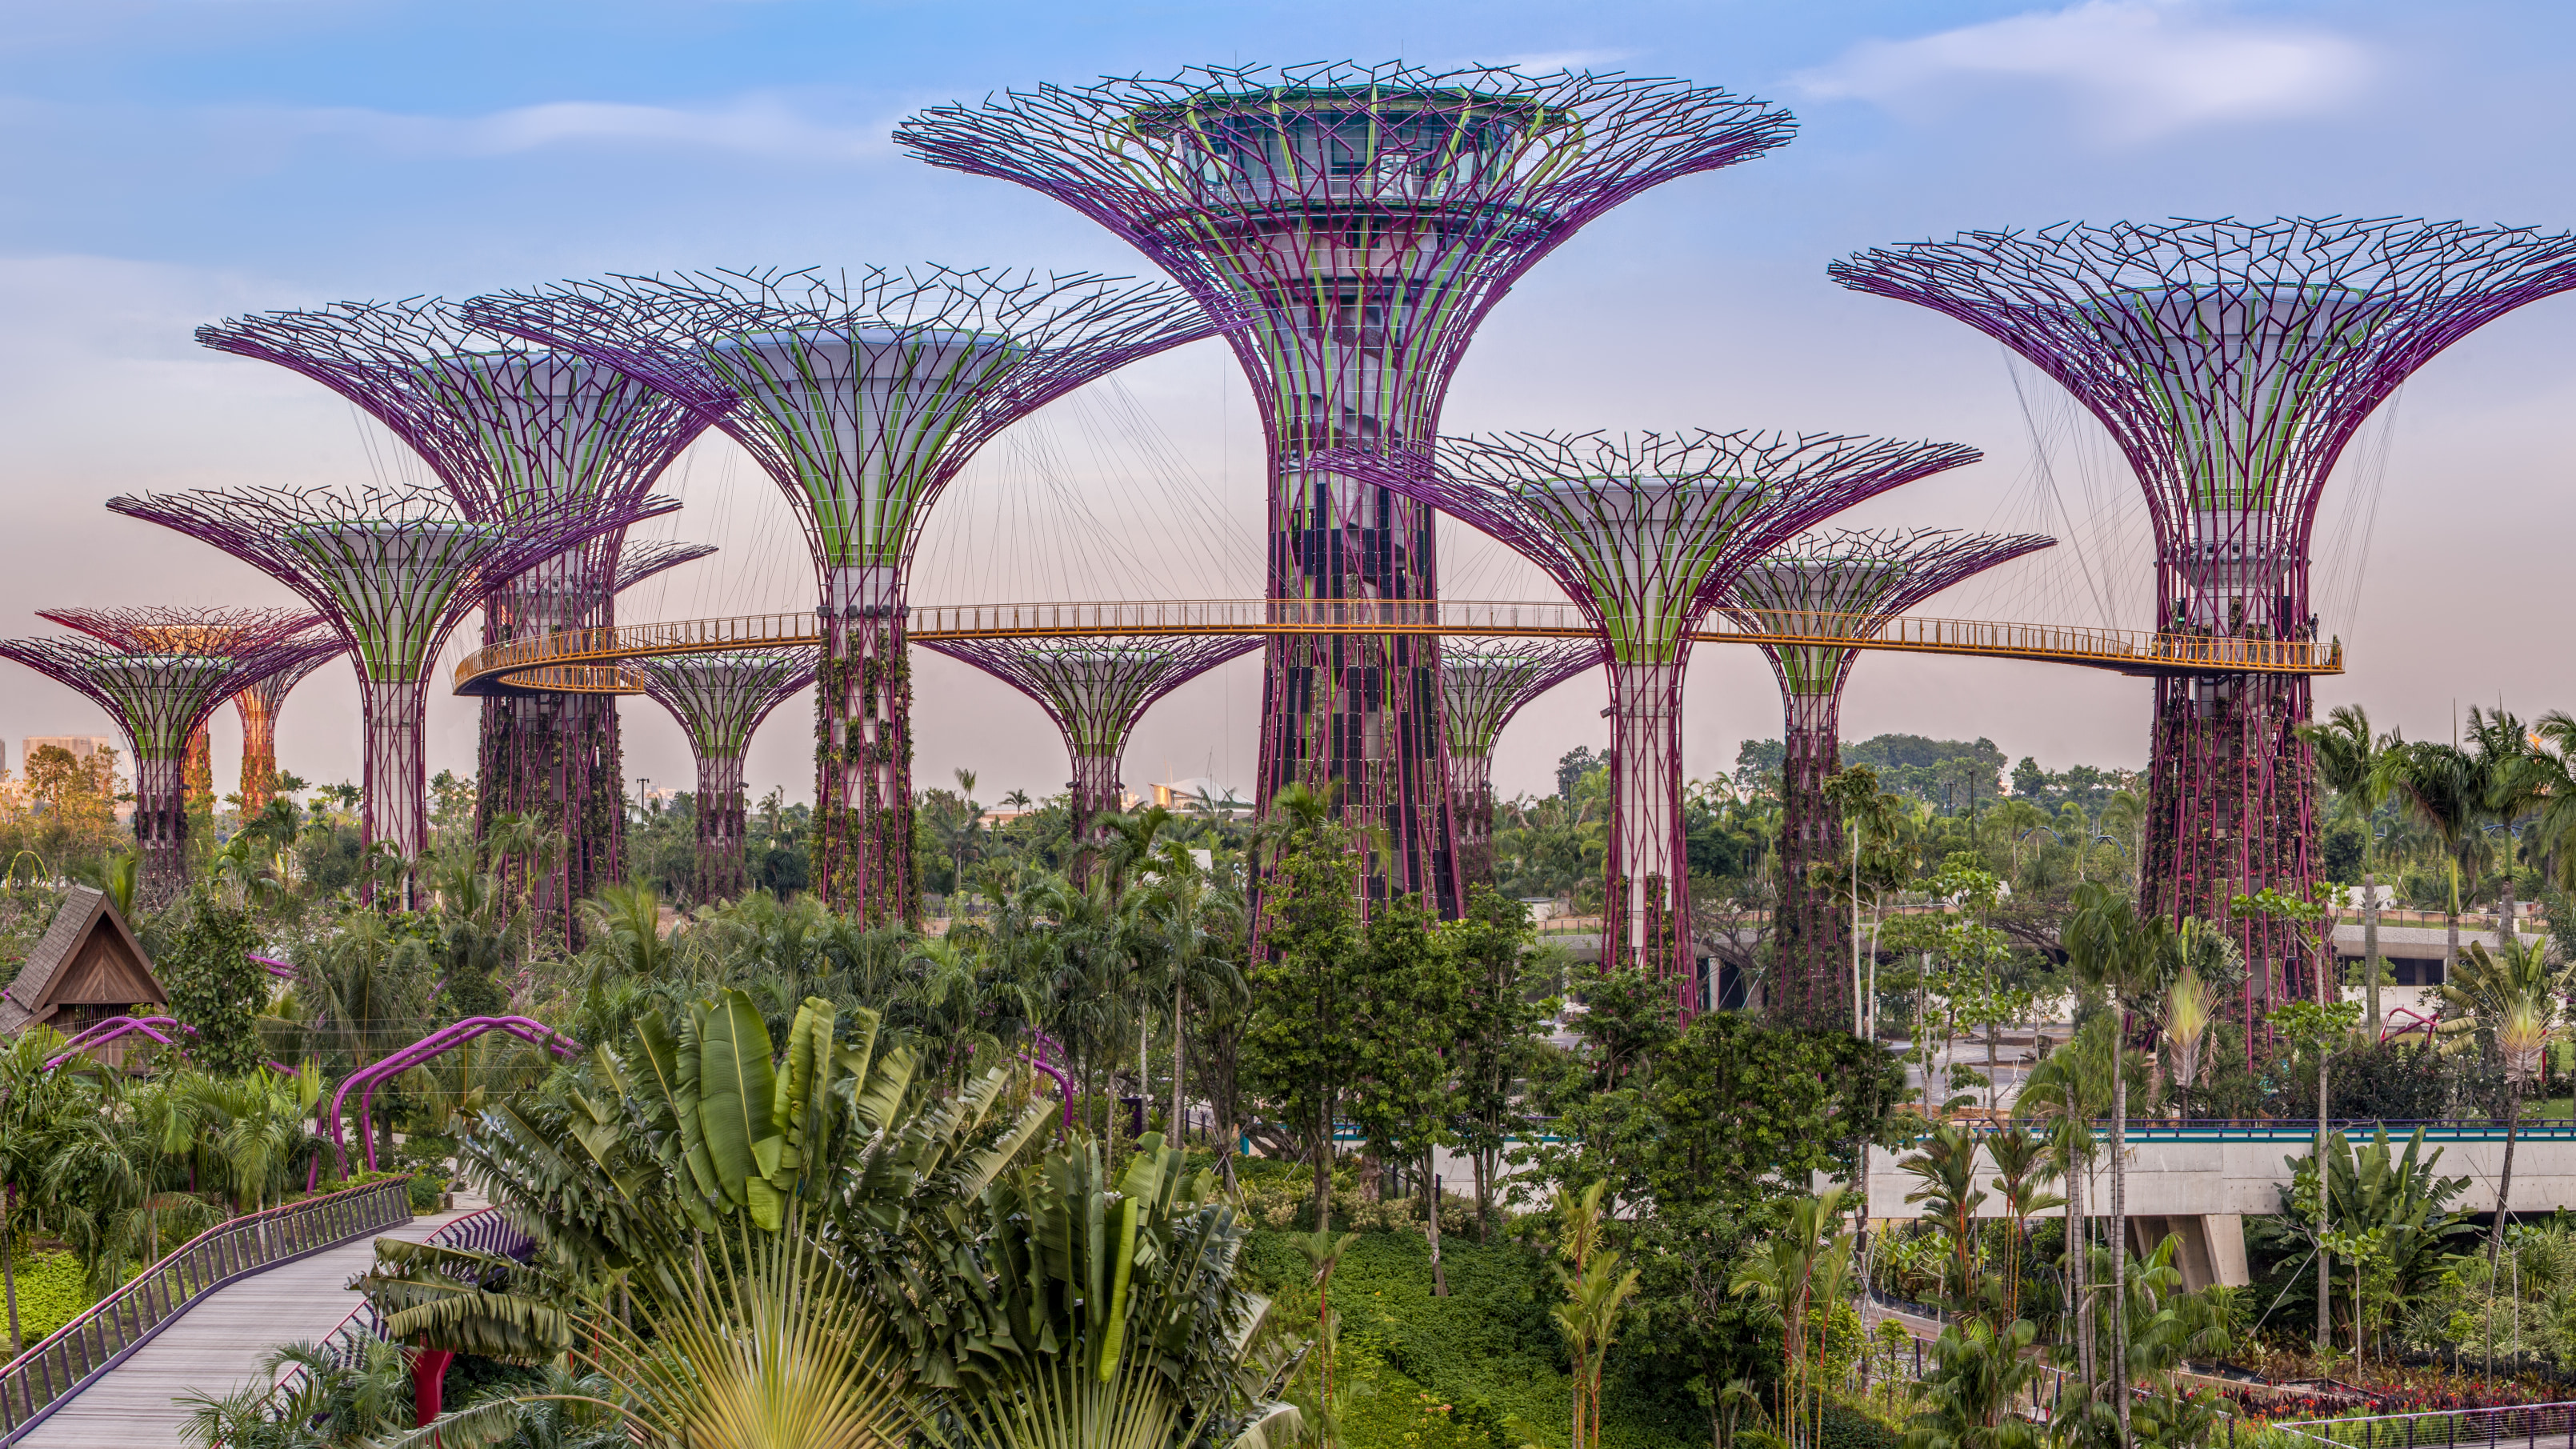 Best things to do in Singapore for Hari Raya 2023 - Singapore's 24